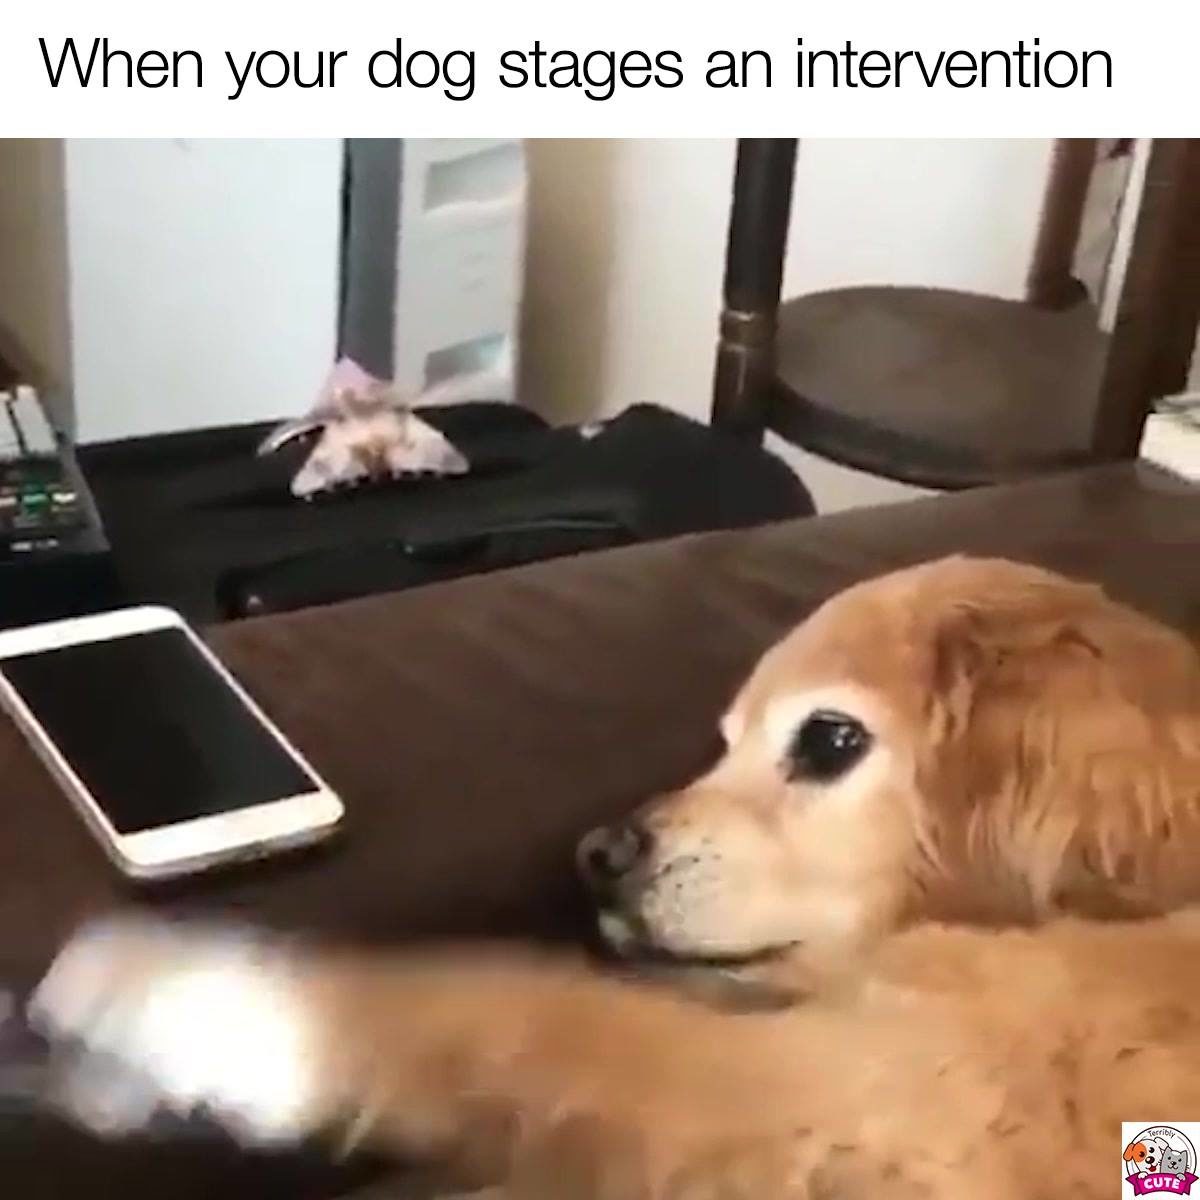 Dogs are soooooo smart